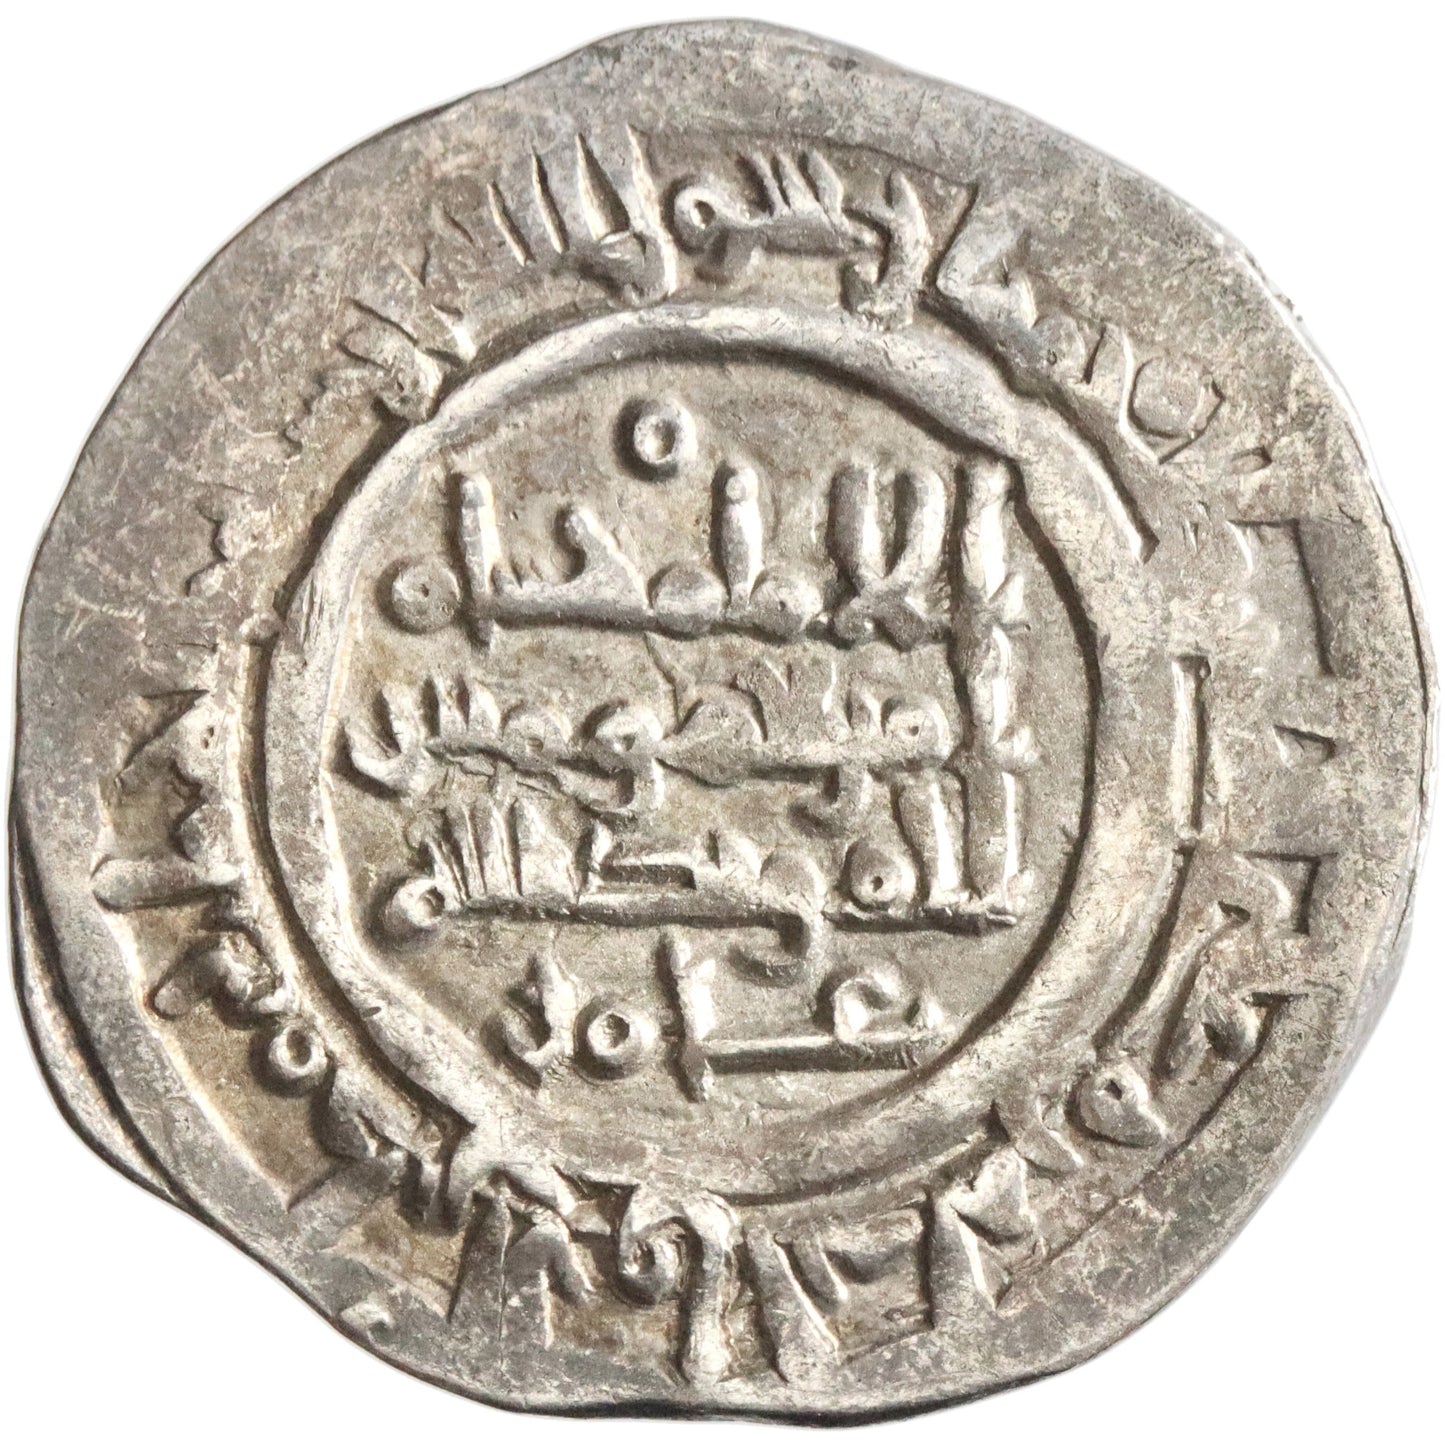 Umayyad of Spain, Hisham II, silver dirham, al-Andalus (Spain) mint, AH 380, citing 'Amir